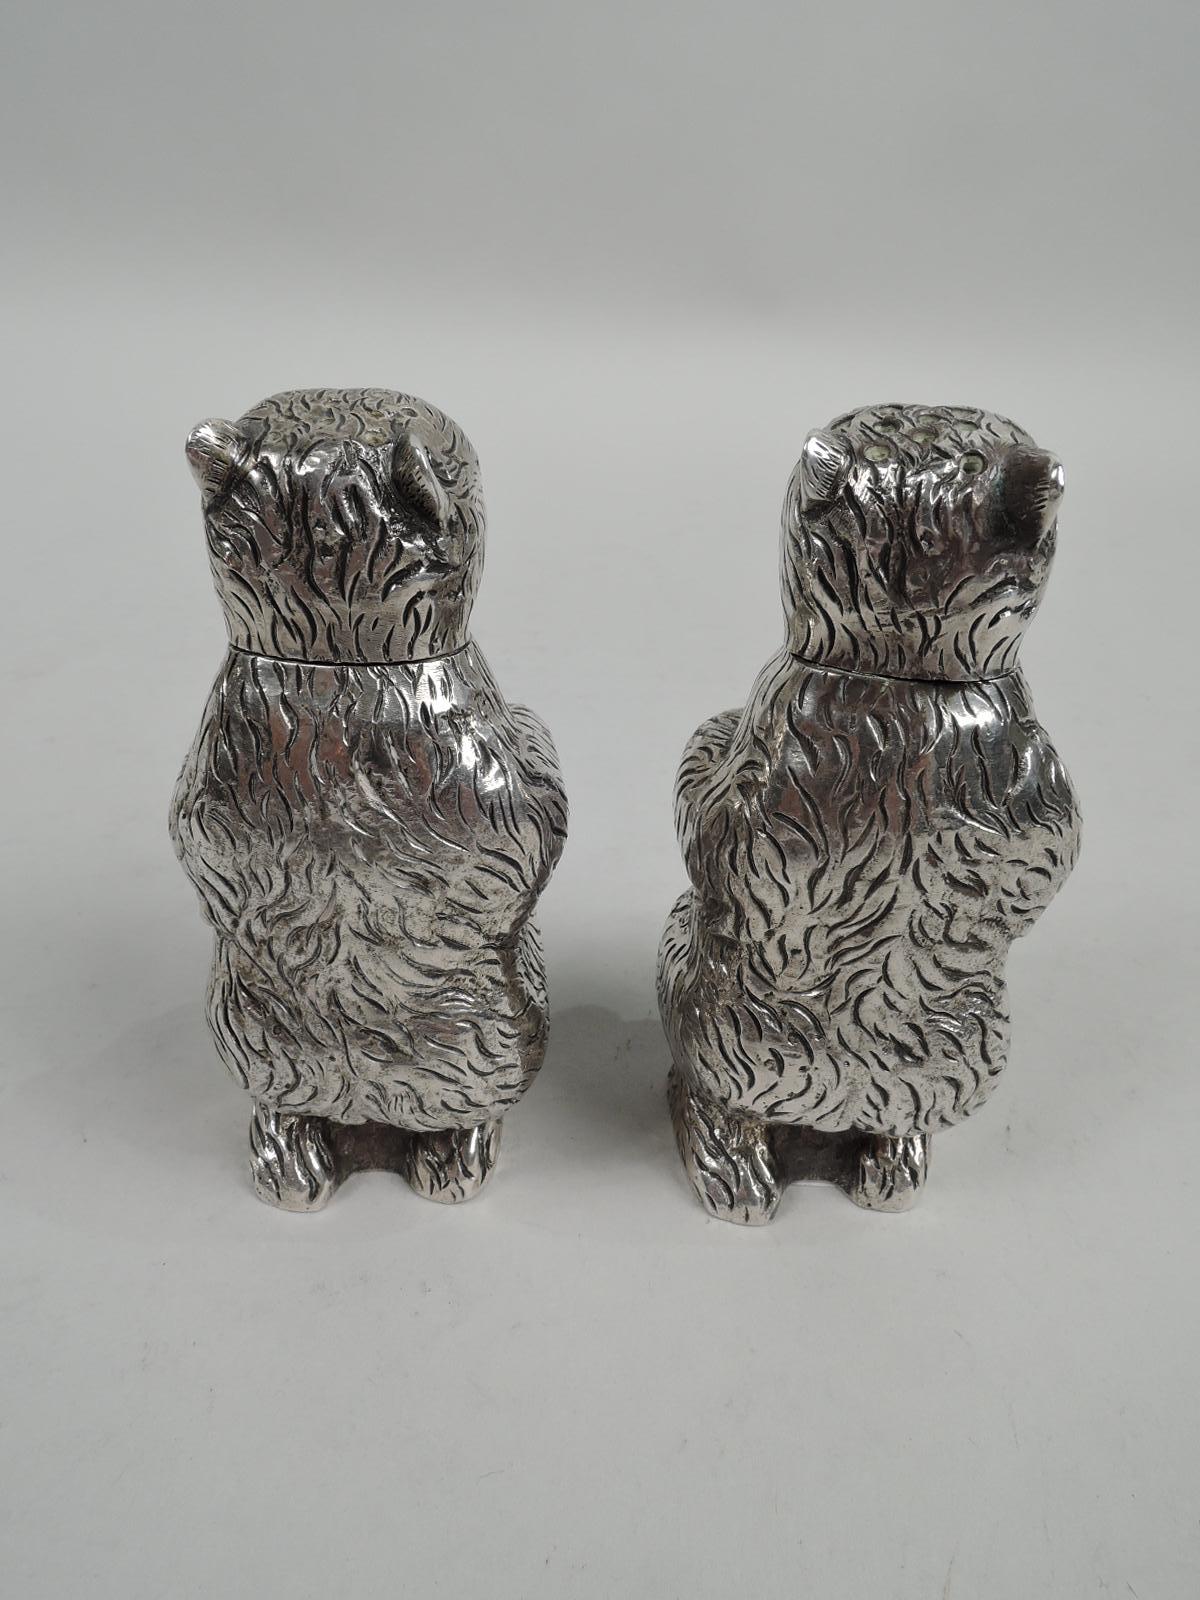 Edwardian Pair of Antique Sterling Silver Bear Salt & Pepper Shakers by Gebelein